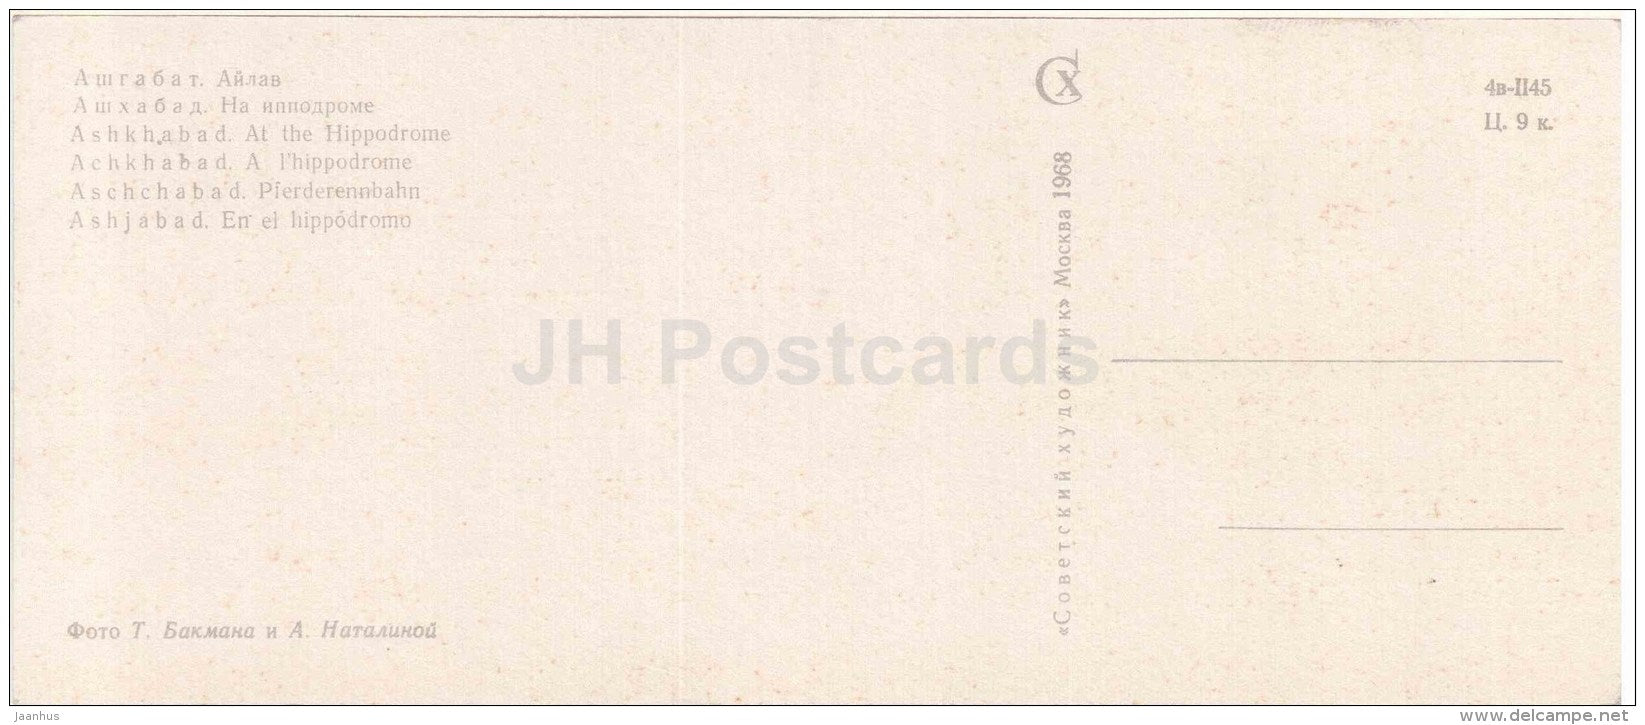 at the Hippodrome - Ashkhabad - Ashgabat - 1968 - Turkmenistan USSR - unused - JH Postcards